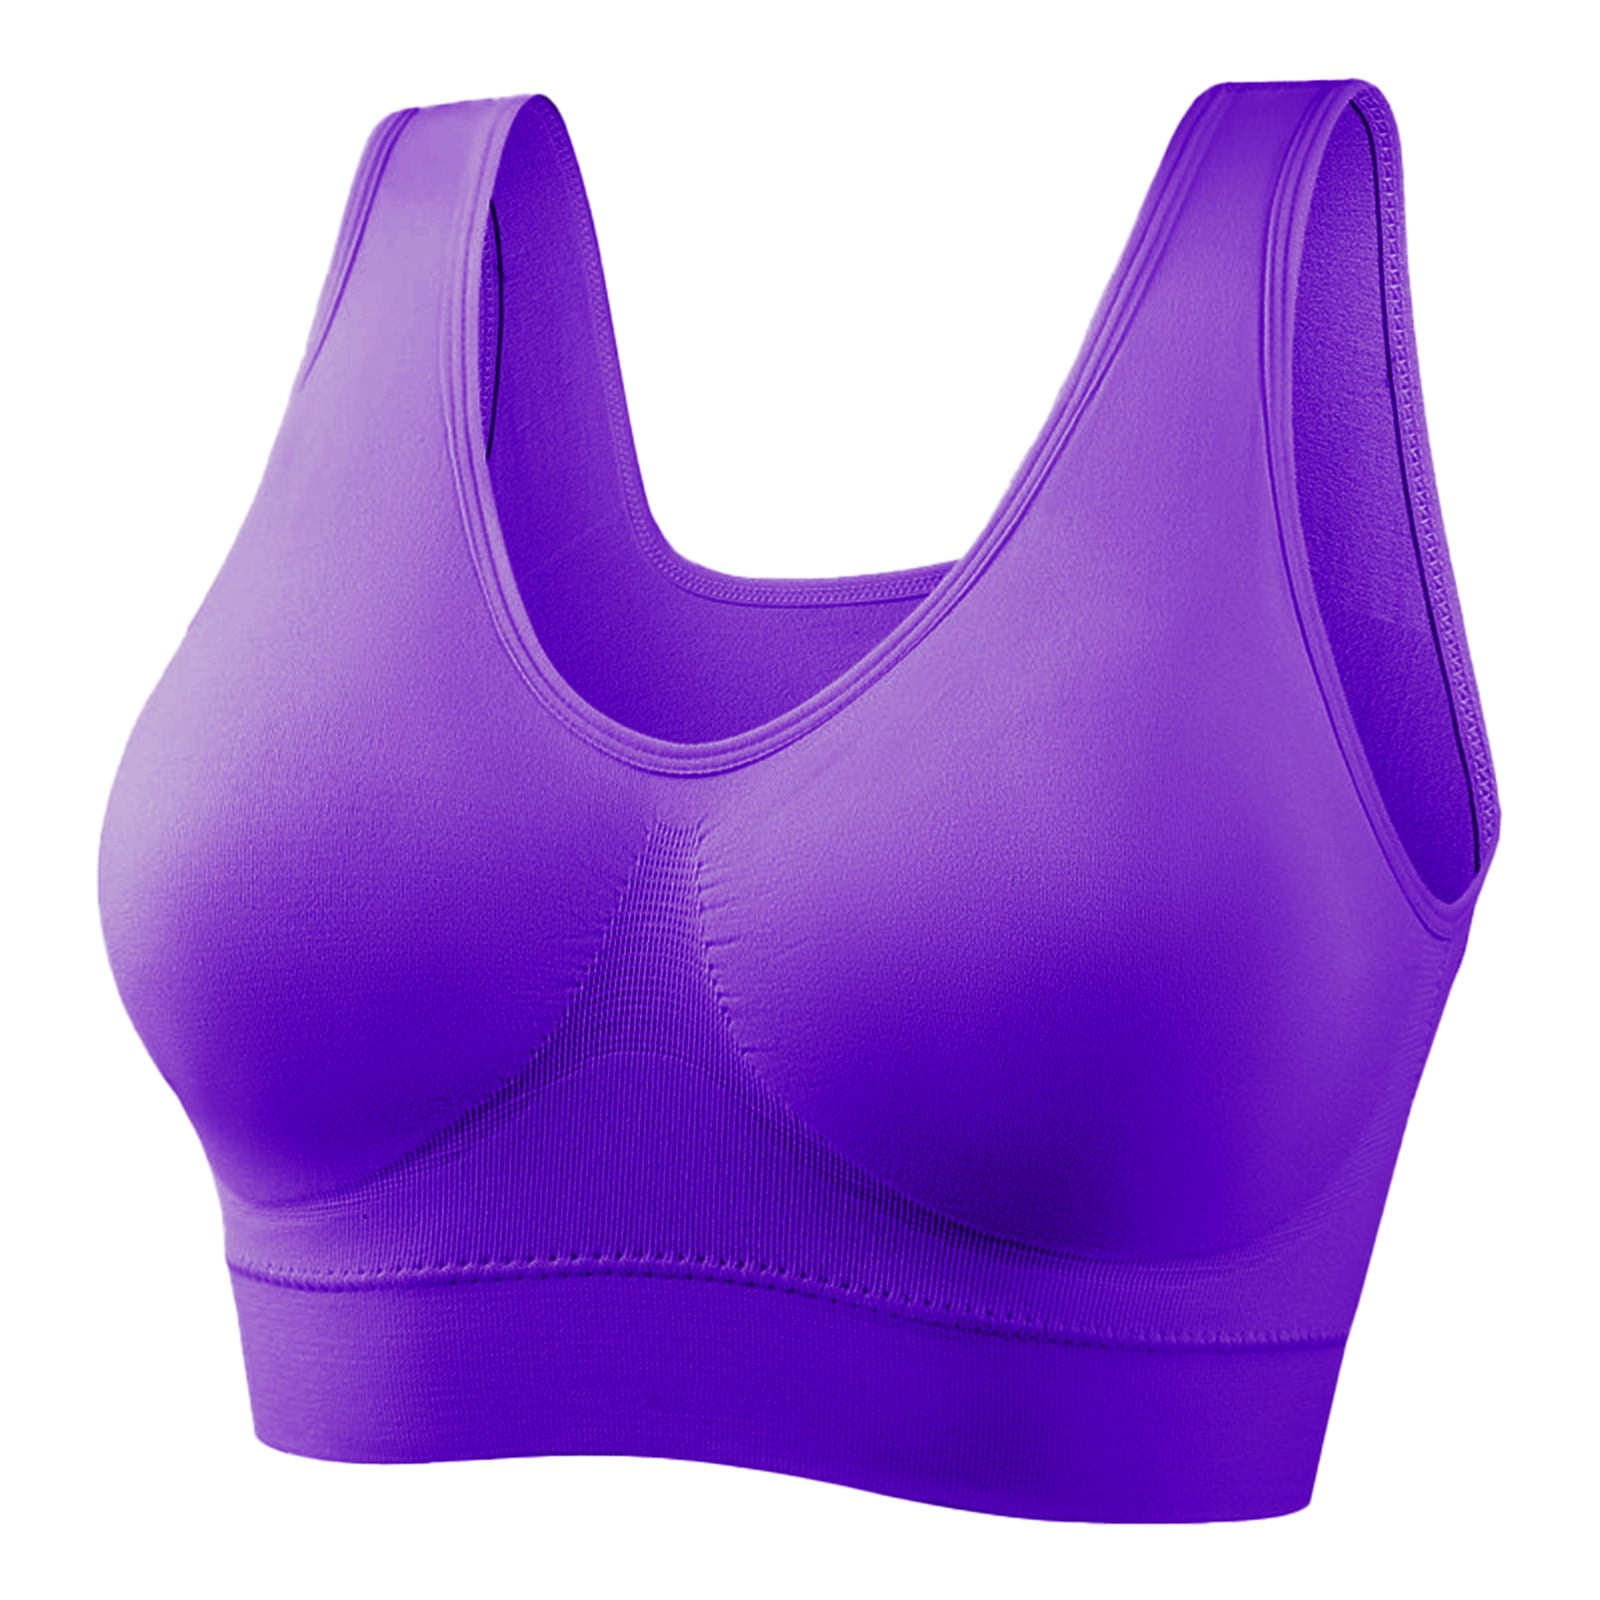 Buy Energy purple sports bra for Women Online in India